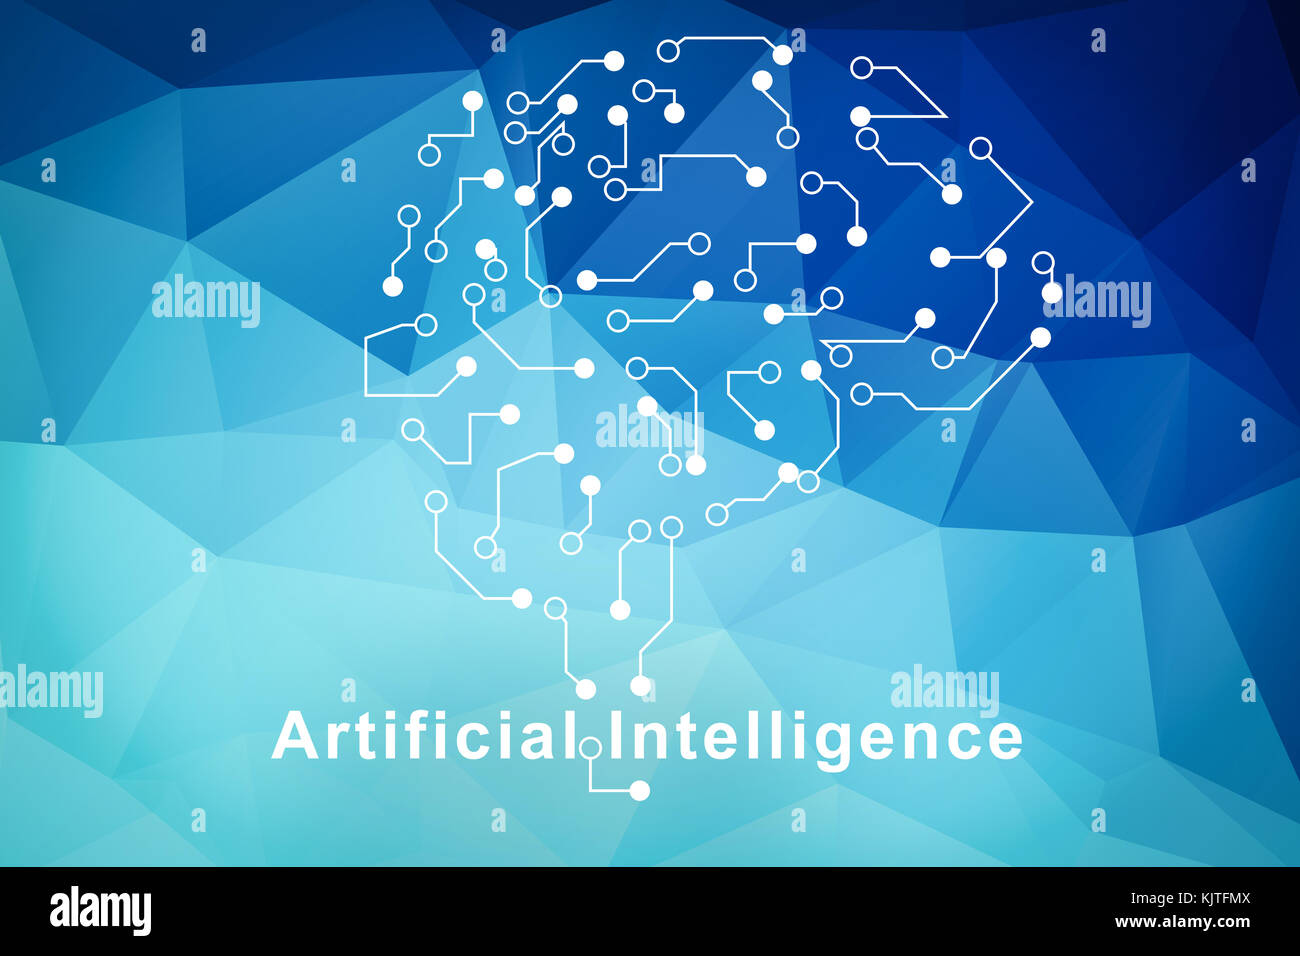 artificial intelligence brain symbol Stock Photo